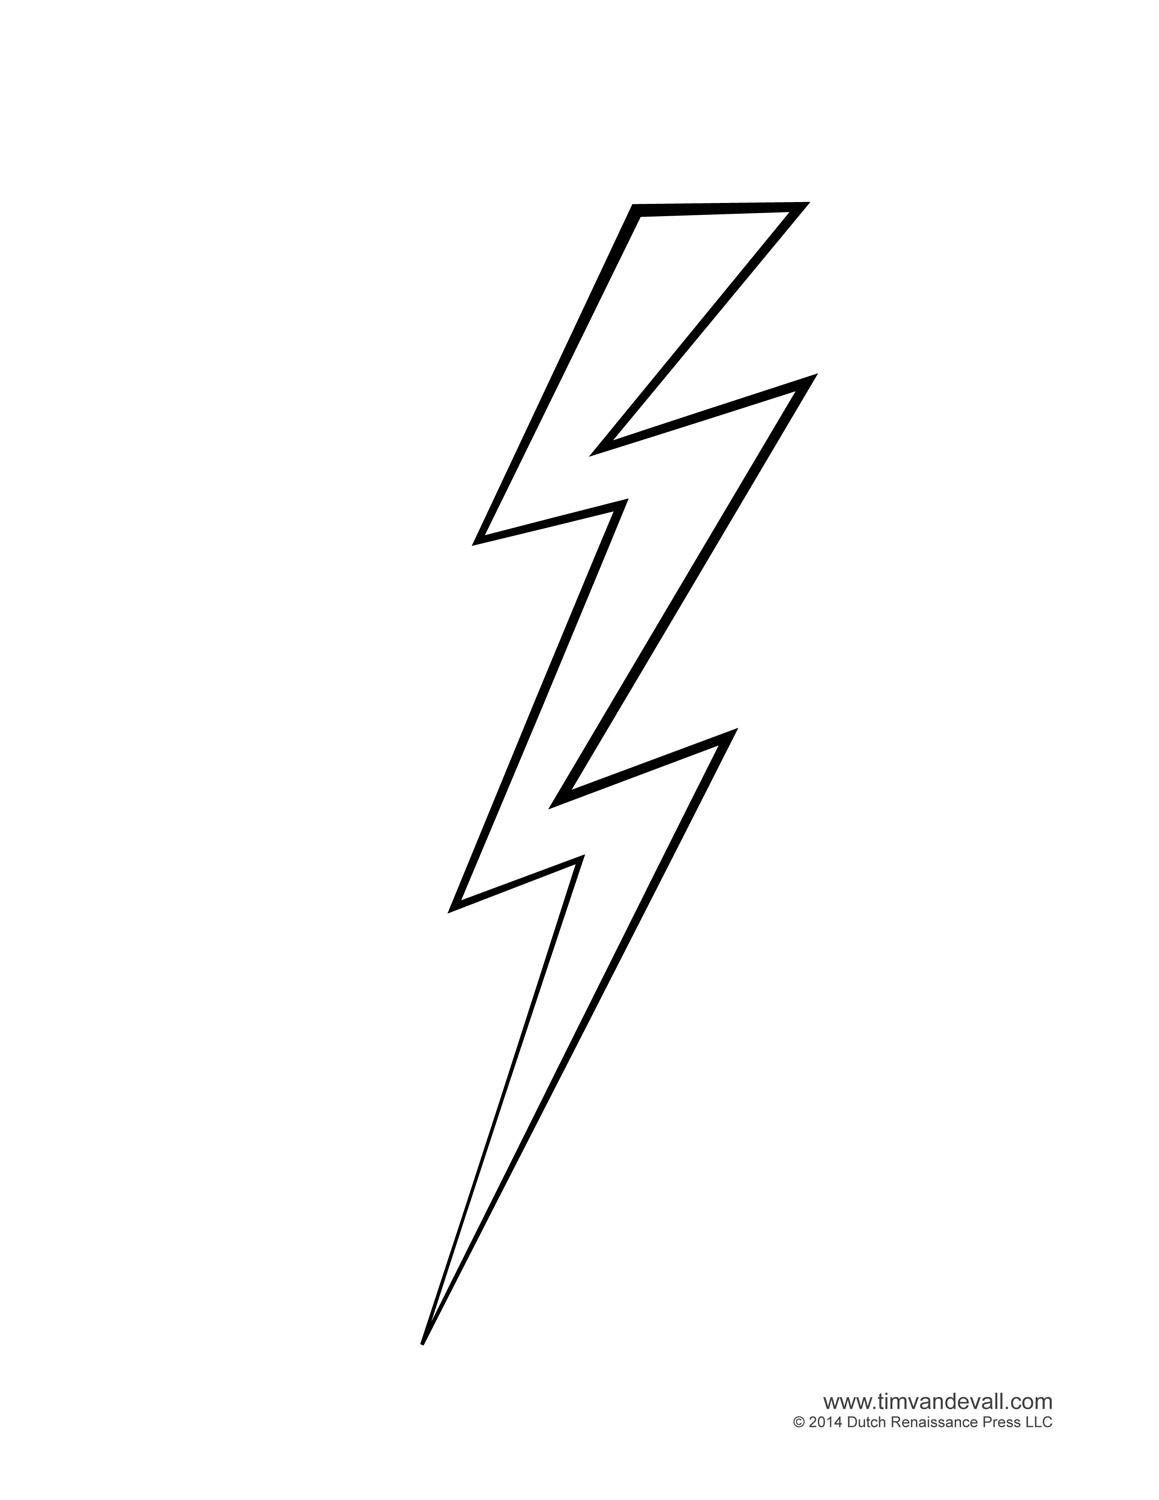 White Lightning Bolt Vector Image Png Image Clipart